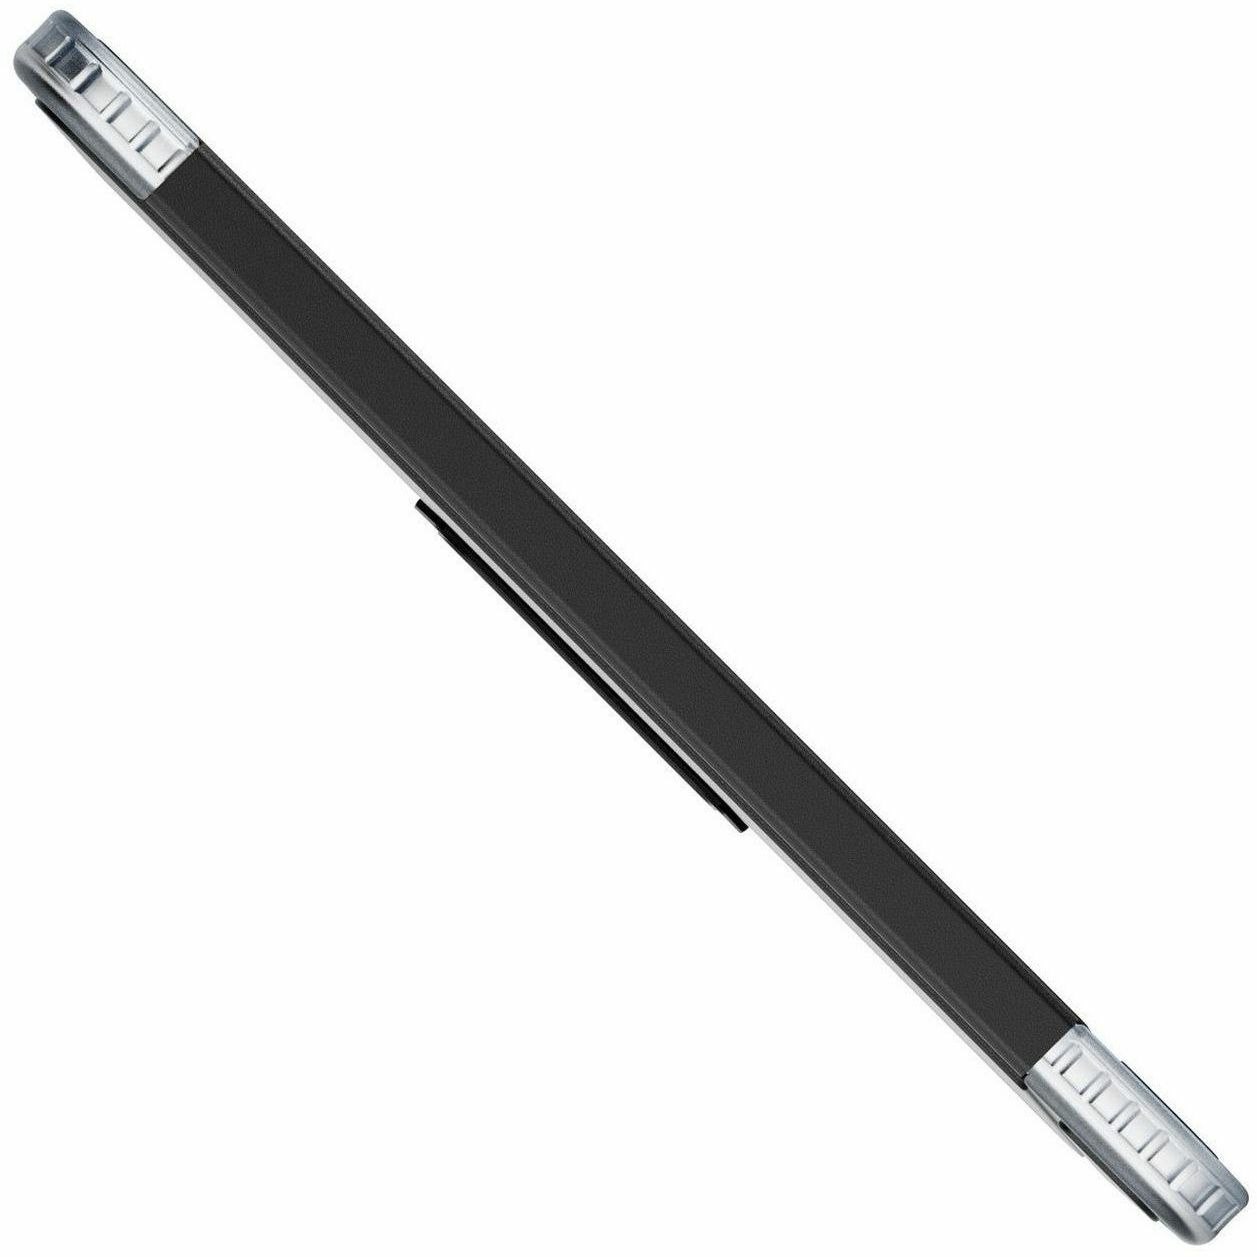 Tech21 Evo Folio Carrying Case (Folio) Apple iPad (10th Generation) Tablet, Apple Pencil - Black